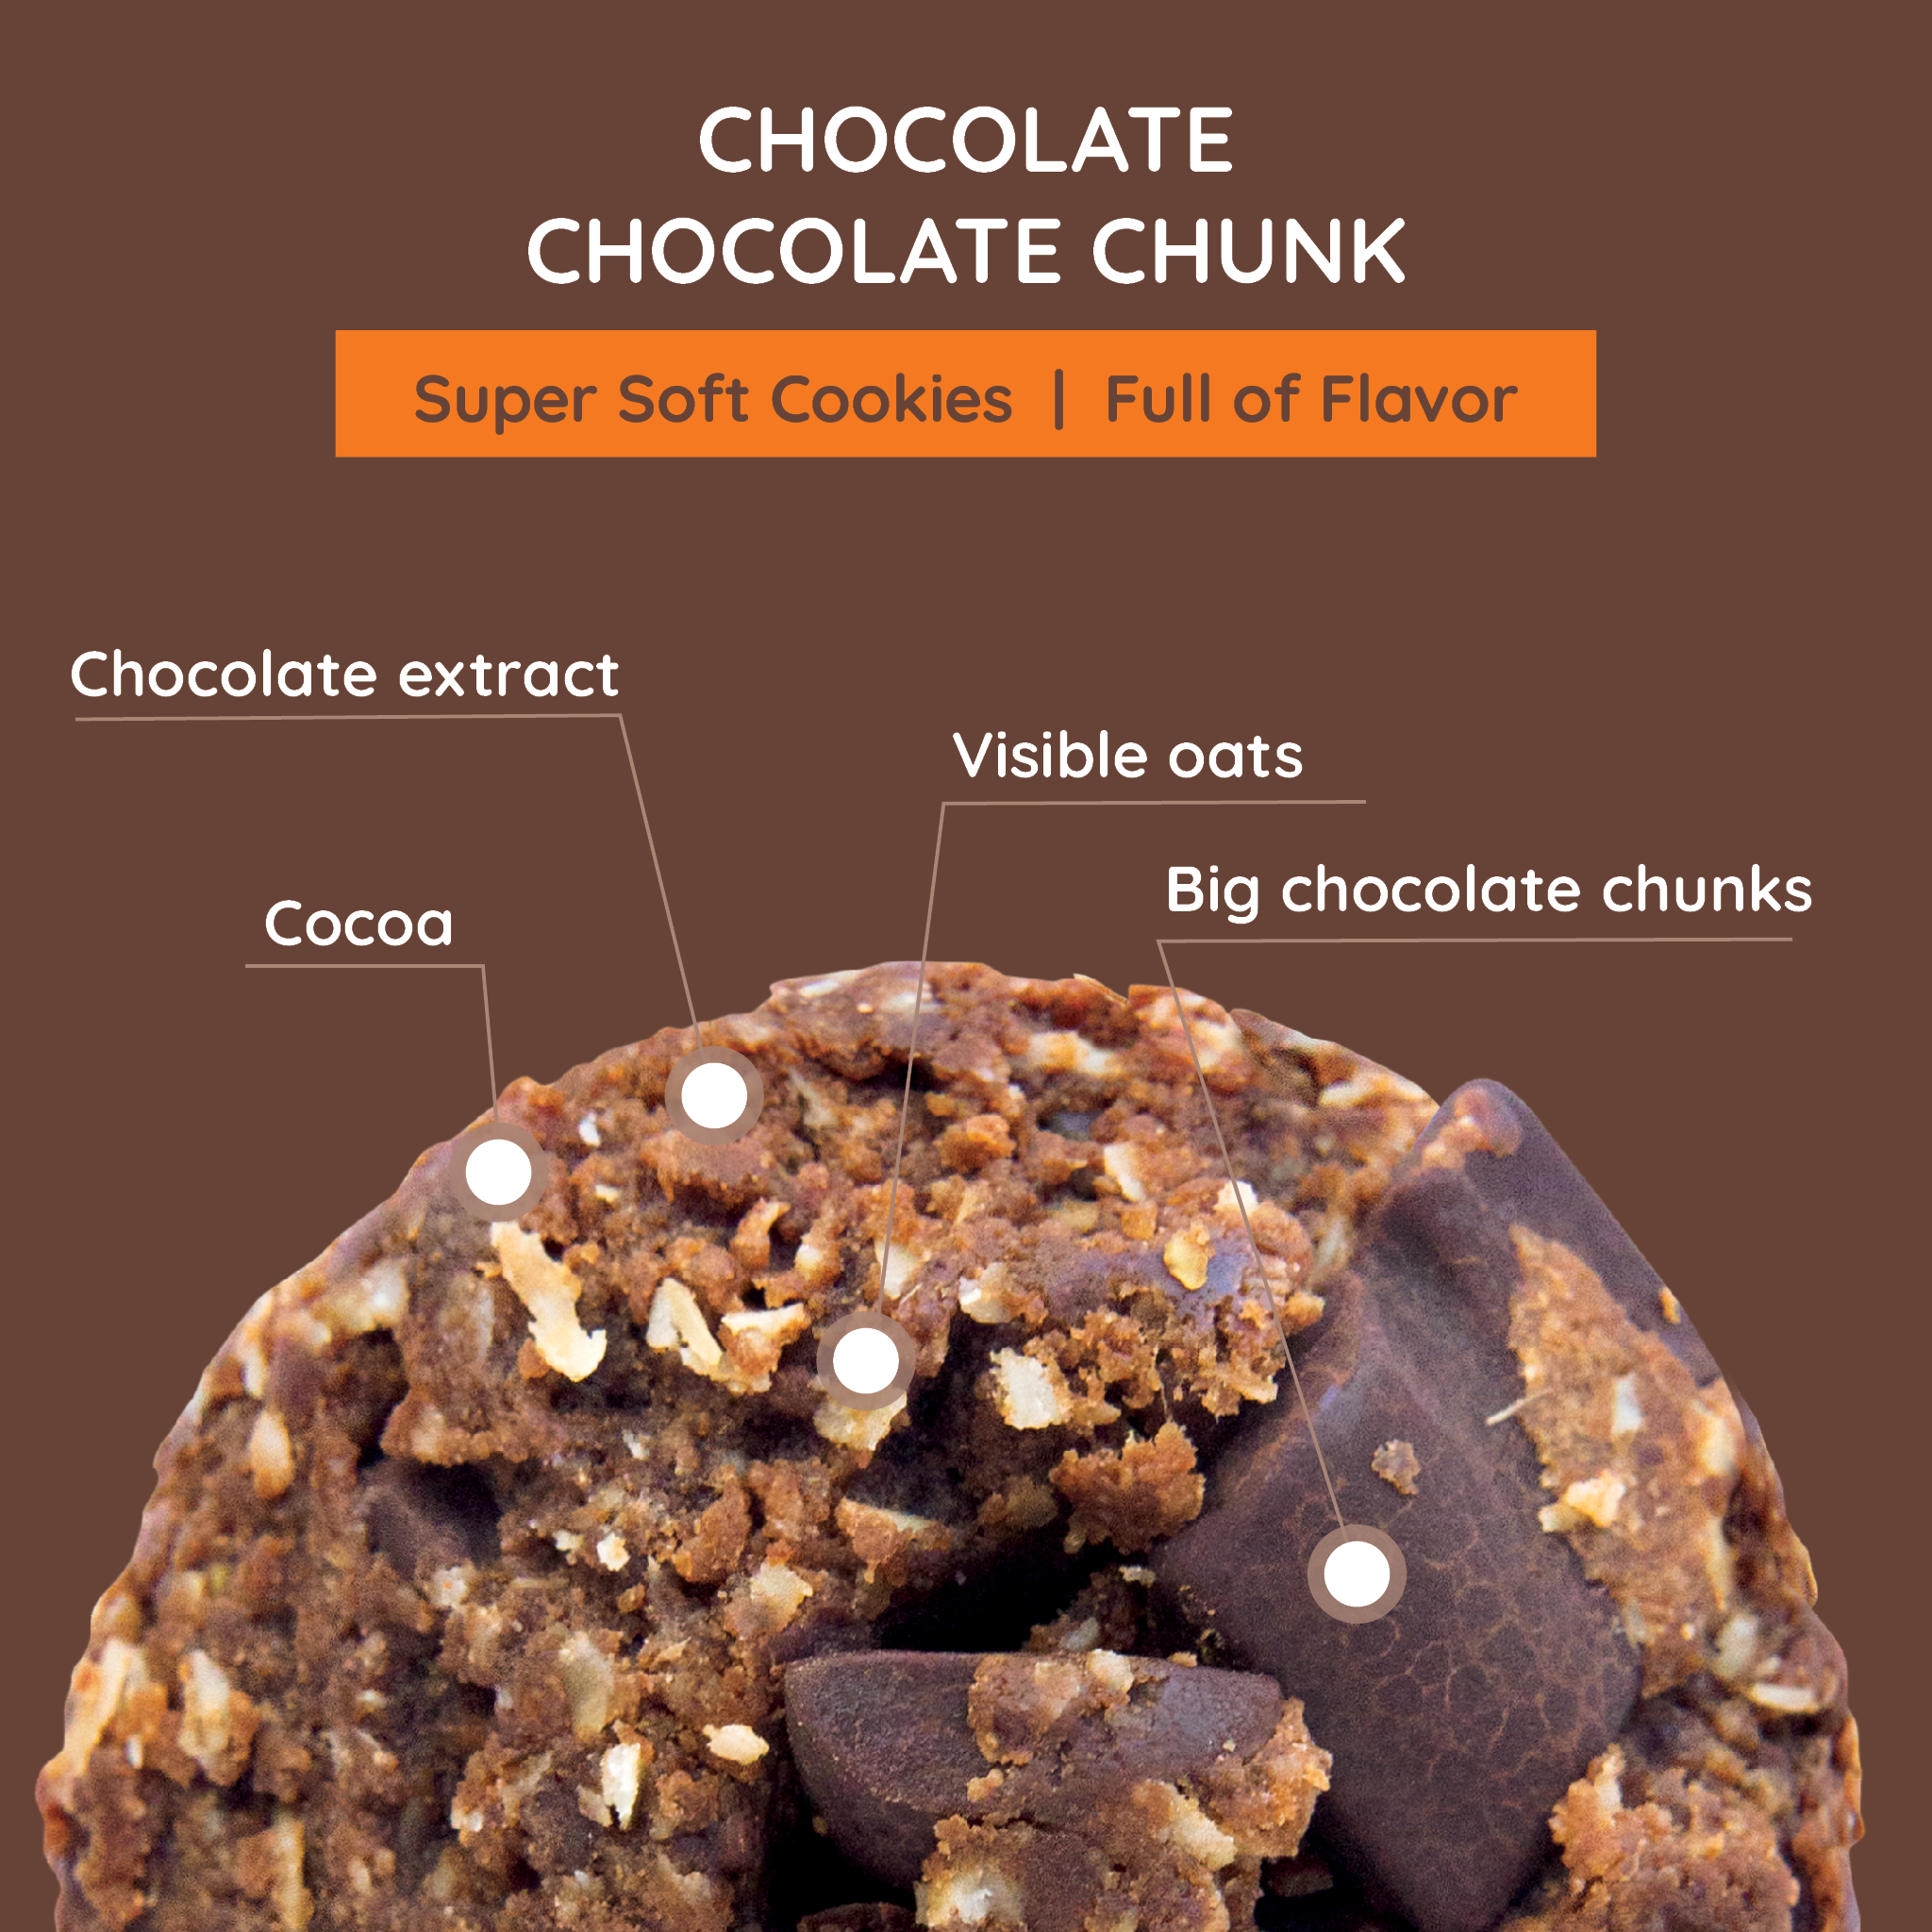 Chocolate Chocolate Chunk Cookies - Individually Wrapped